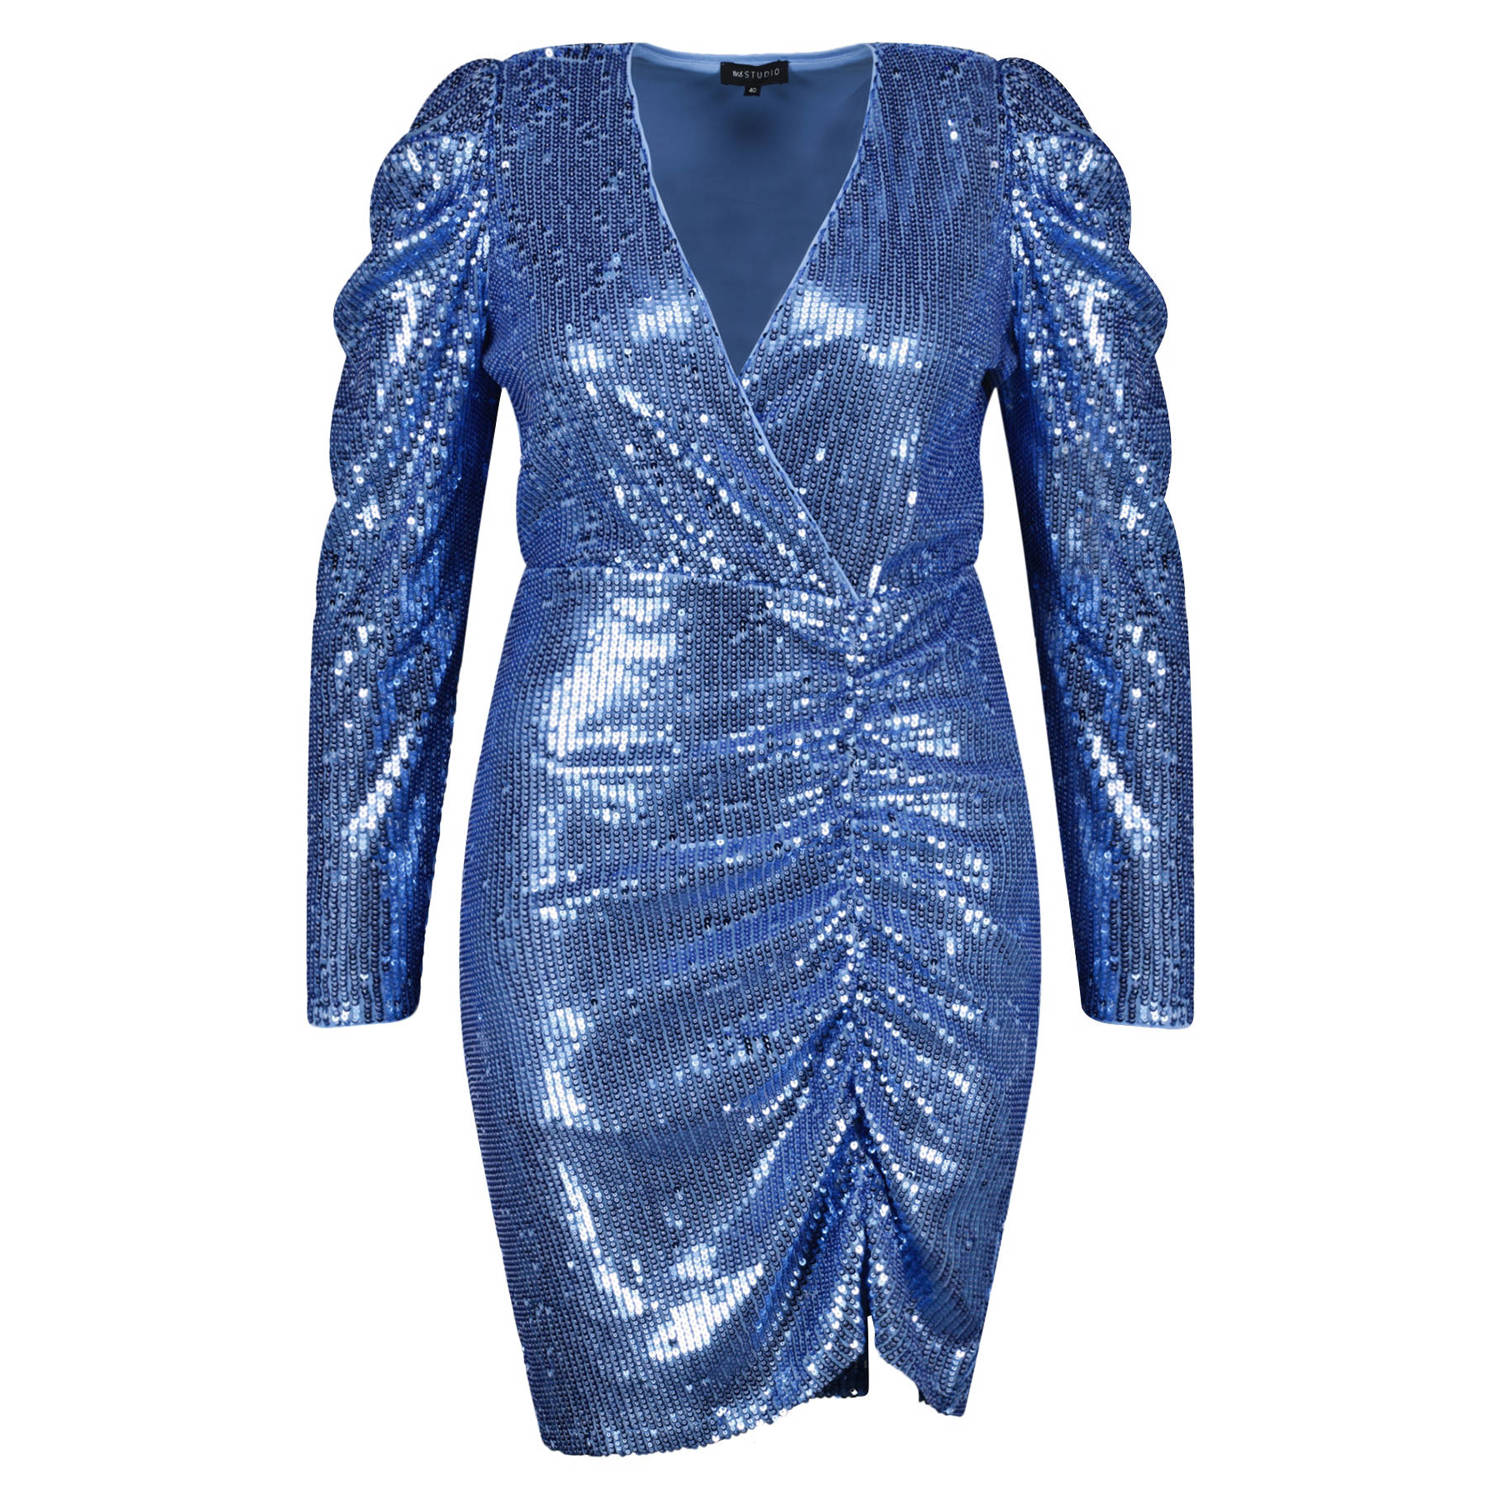 MS Mode jurk met pailletten blauw